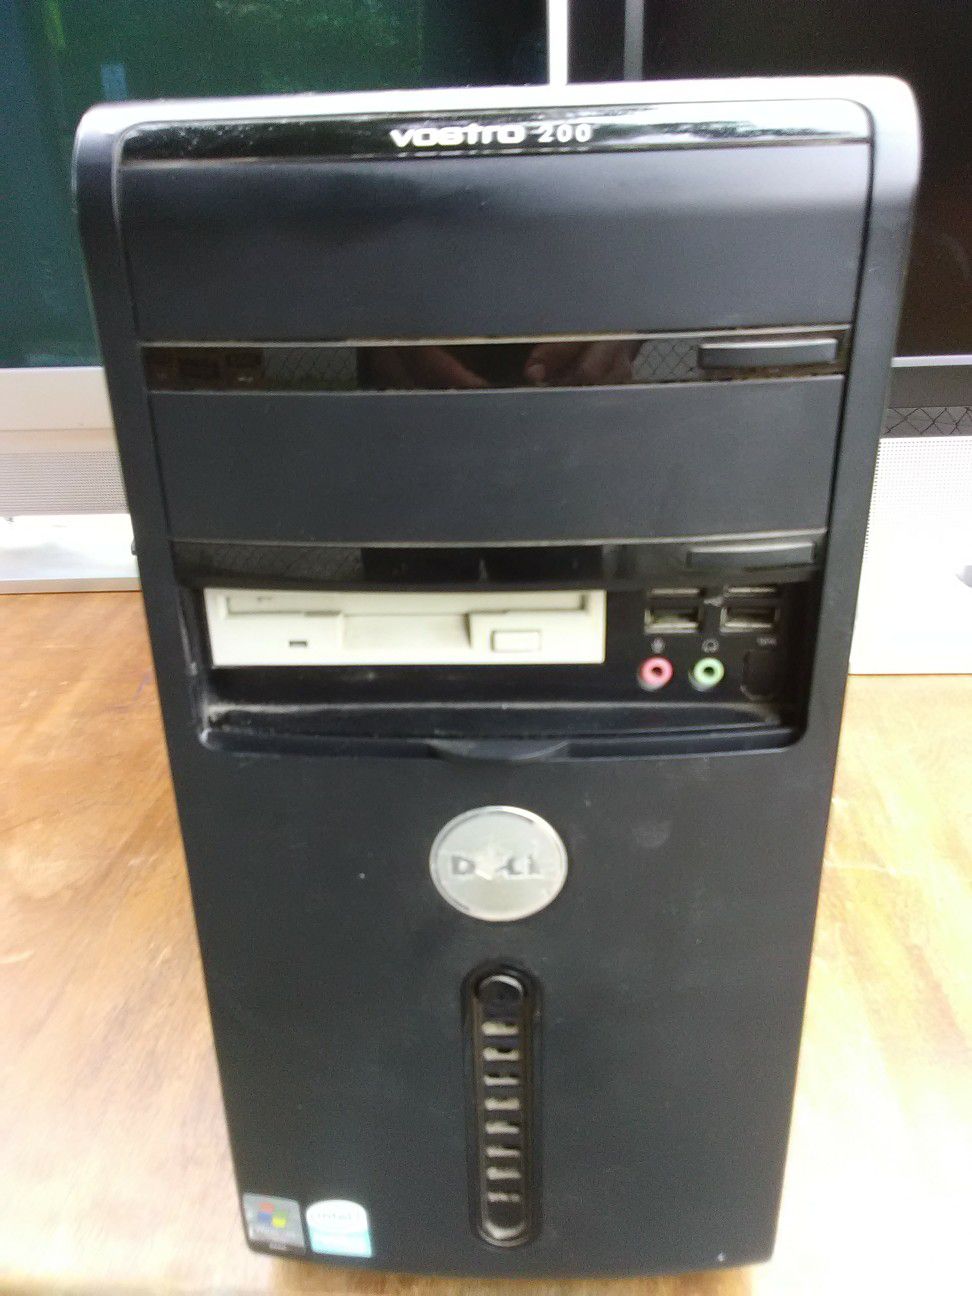 Dell Vostro desktop computer with no hard drives